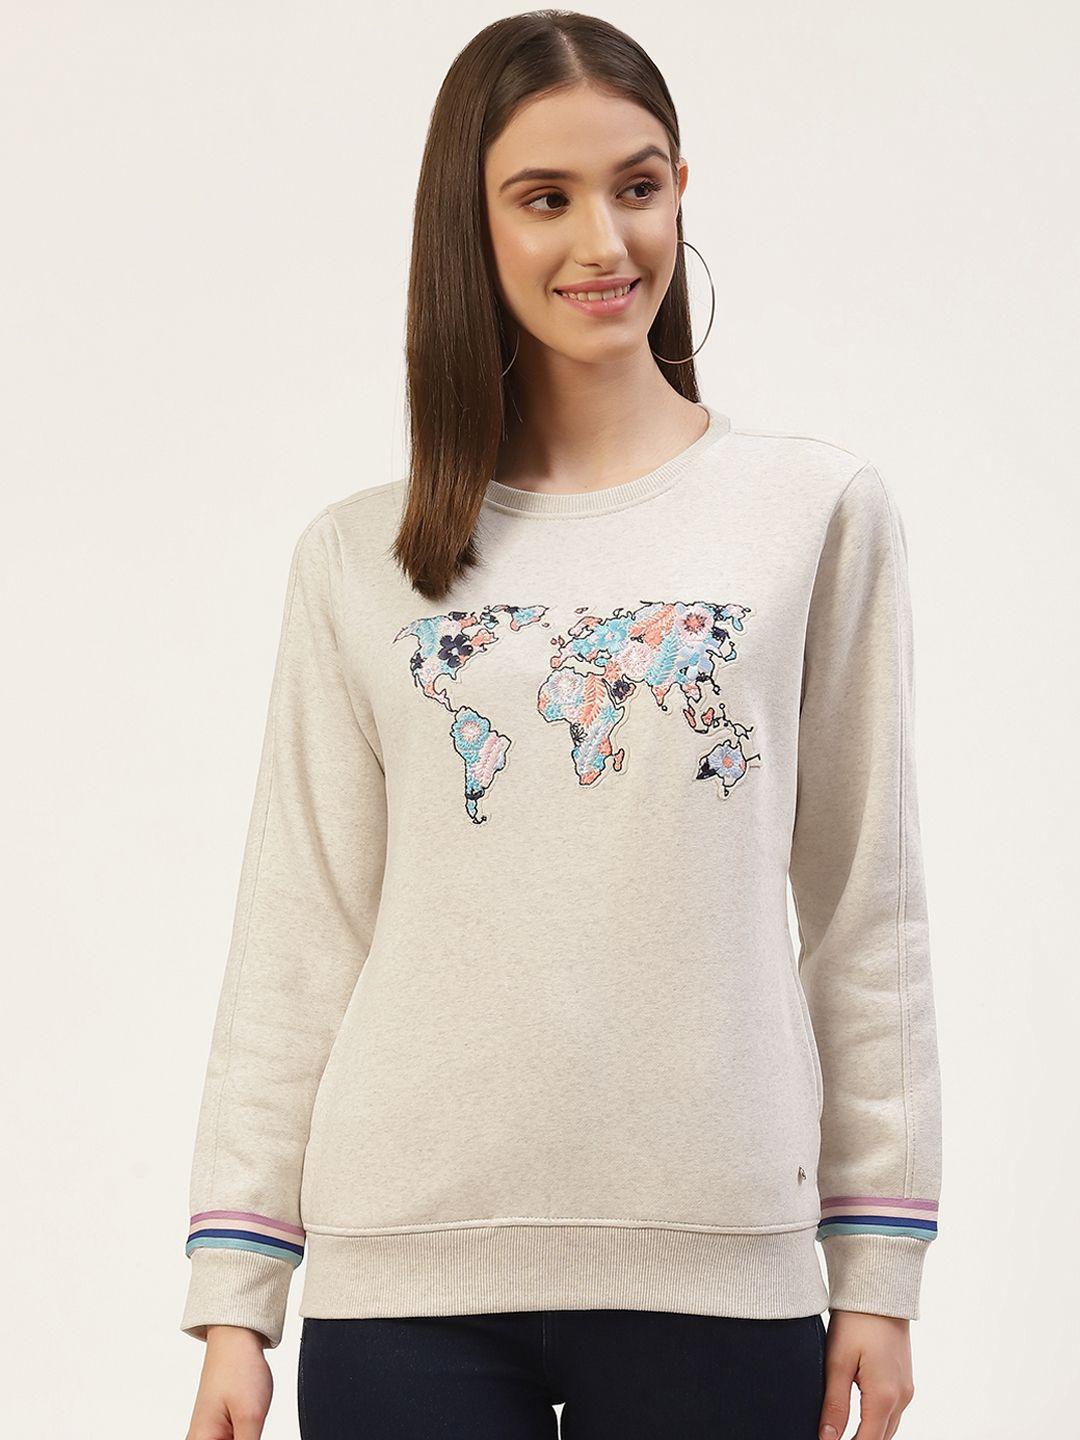 monte-carlo-women-grey-melange-embroidered-sweatshirt